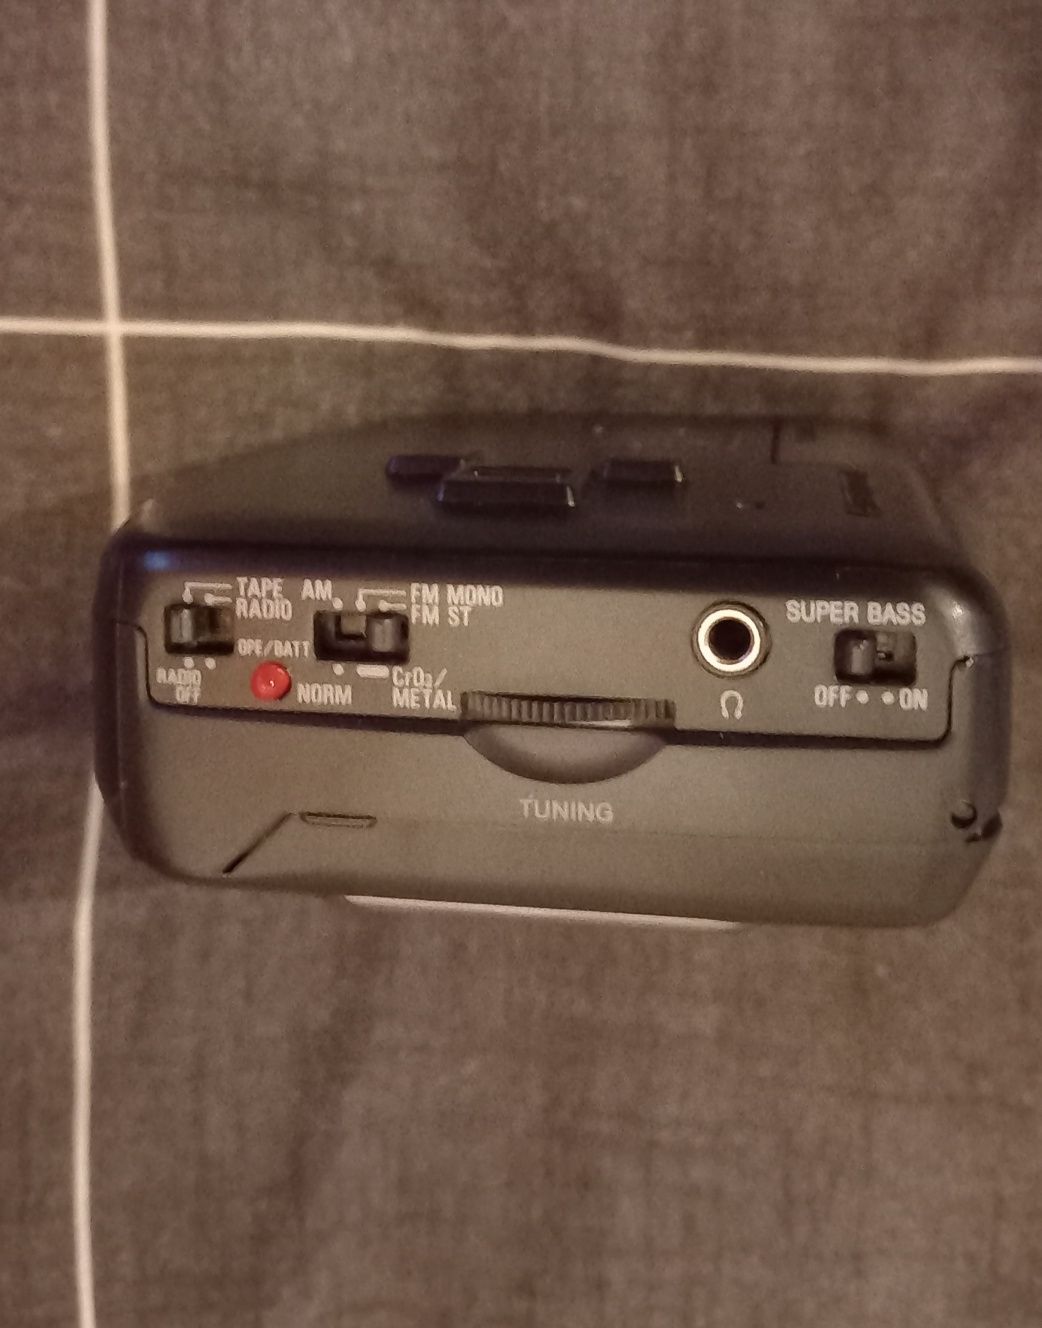 Walkman Aiwa TA123 com superbass e rádio